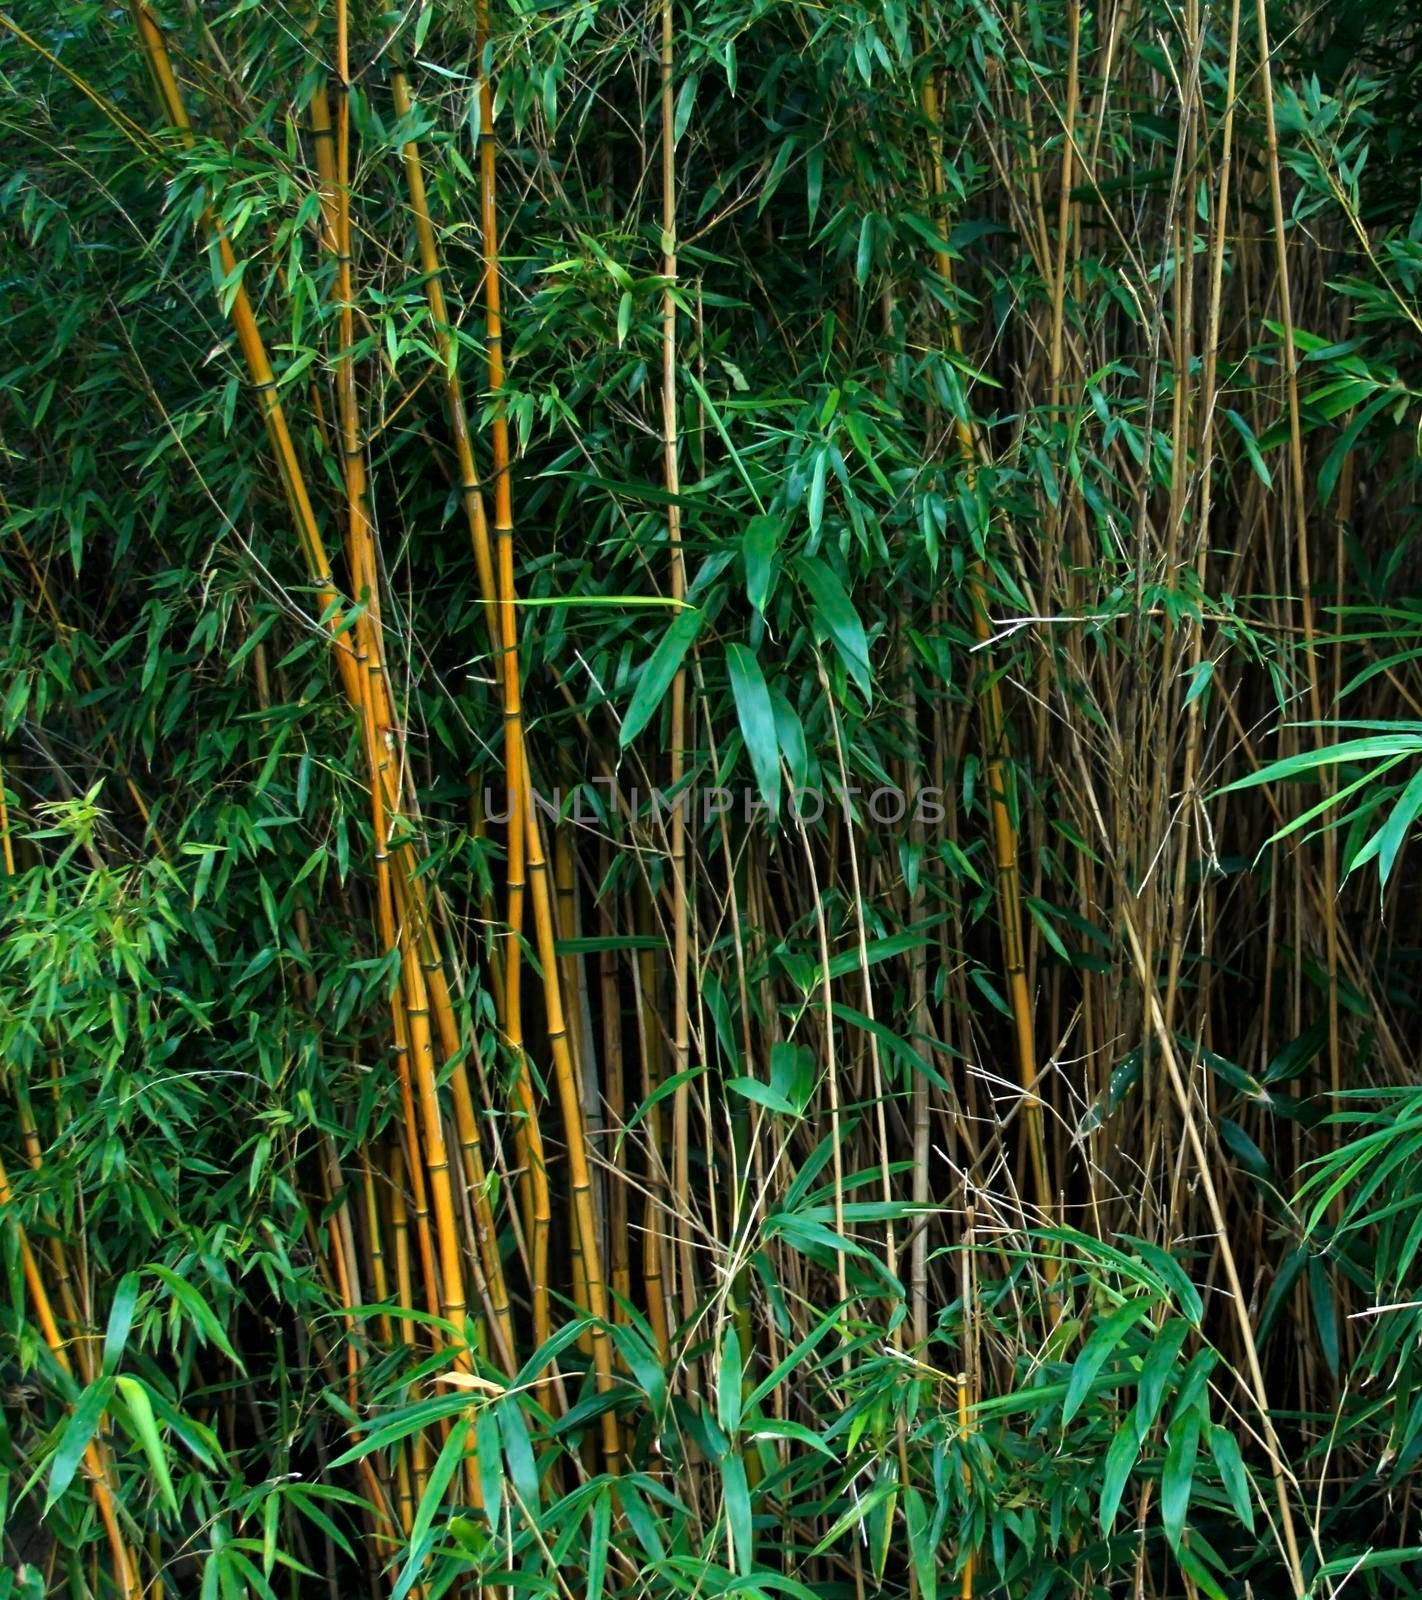 Bamboo stalks by Lirch